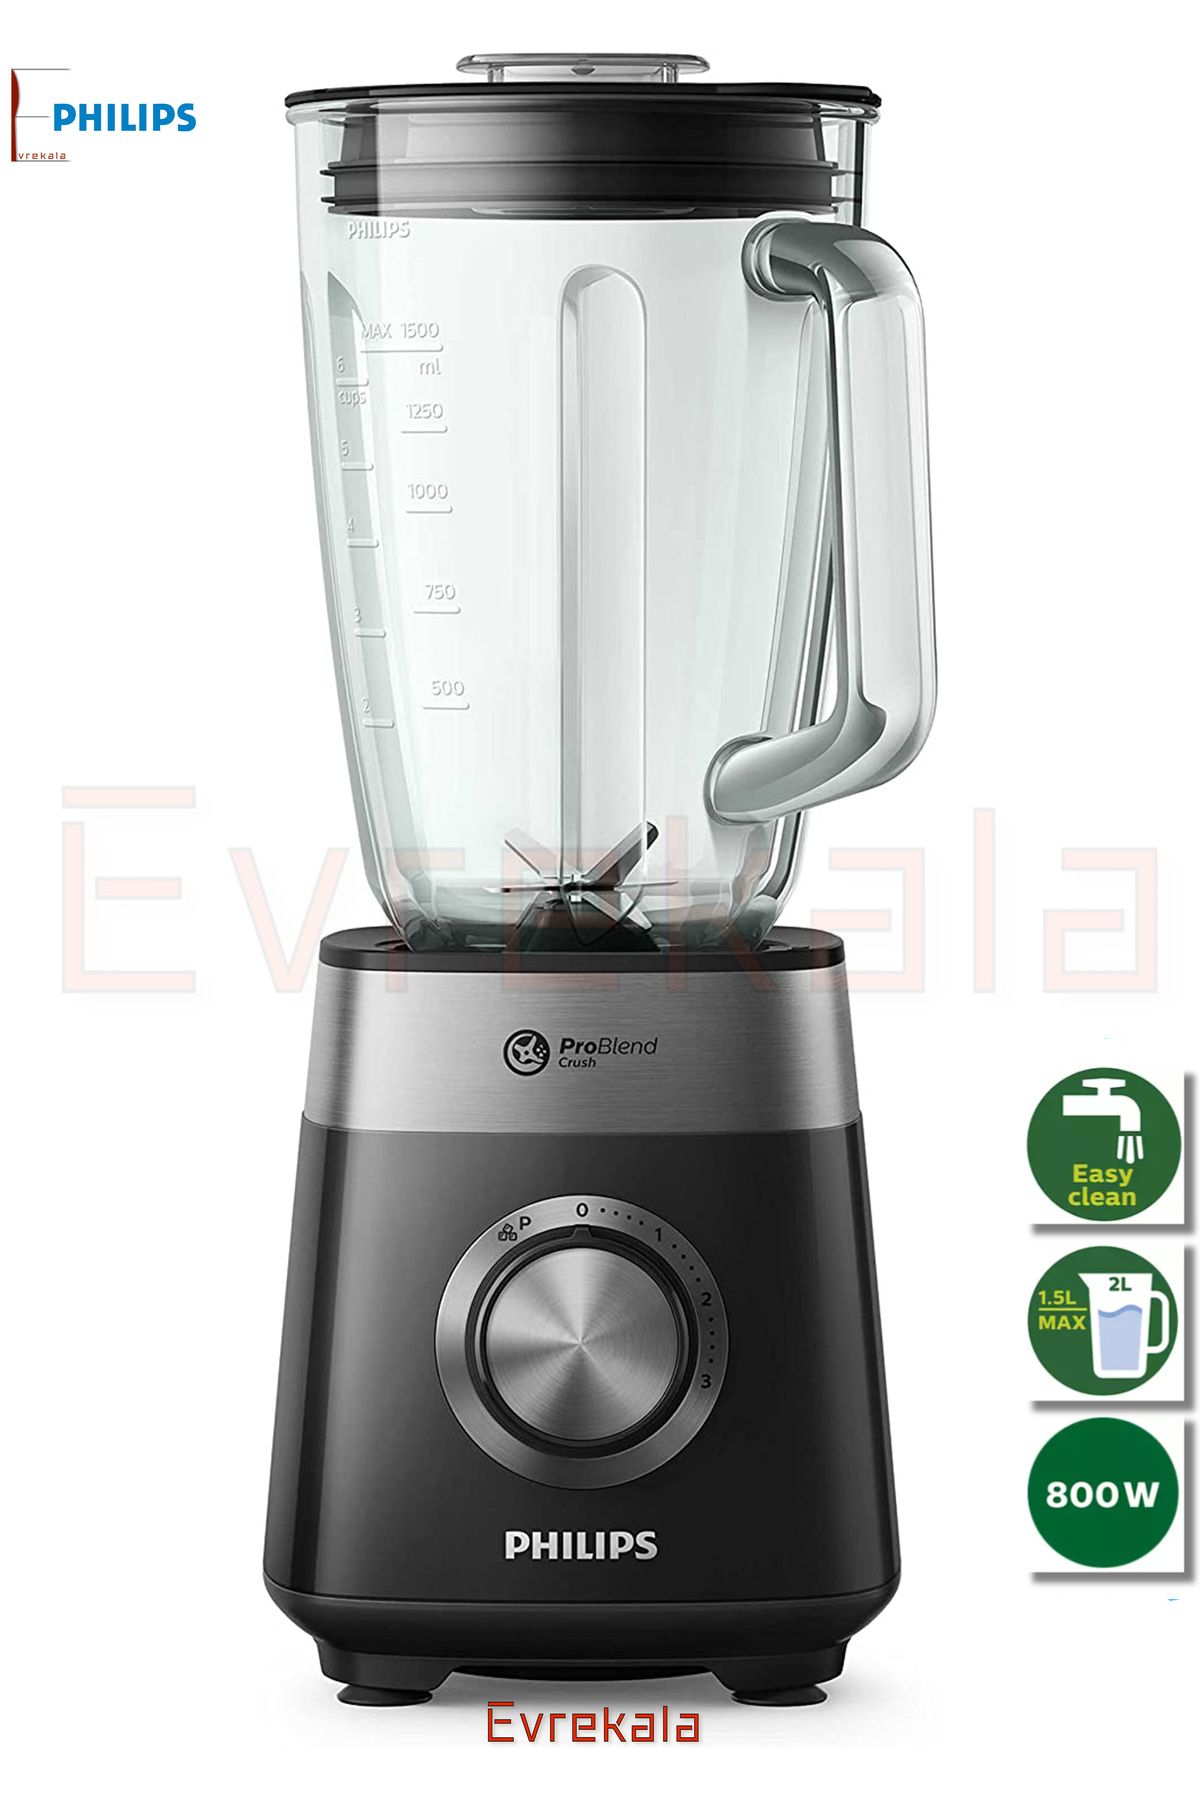 Philips Evrekala Blender Smoothie Makinesi Philips Problend Cam Buz Kırıcı -Yetkili Evrekala-New Series